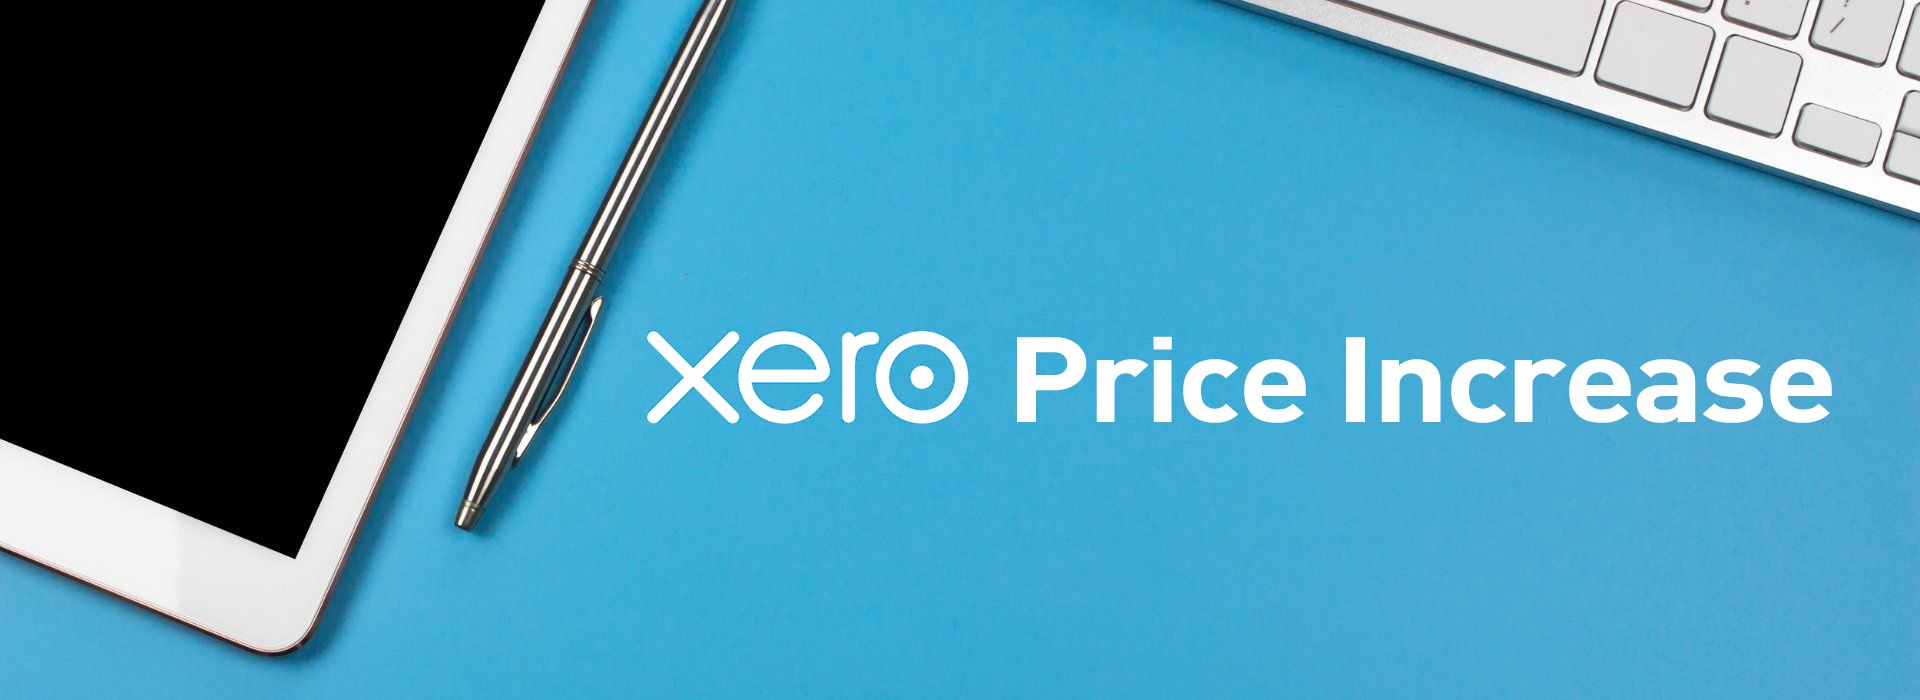 Xero Price Increase